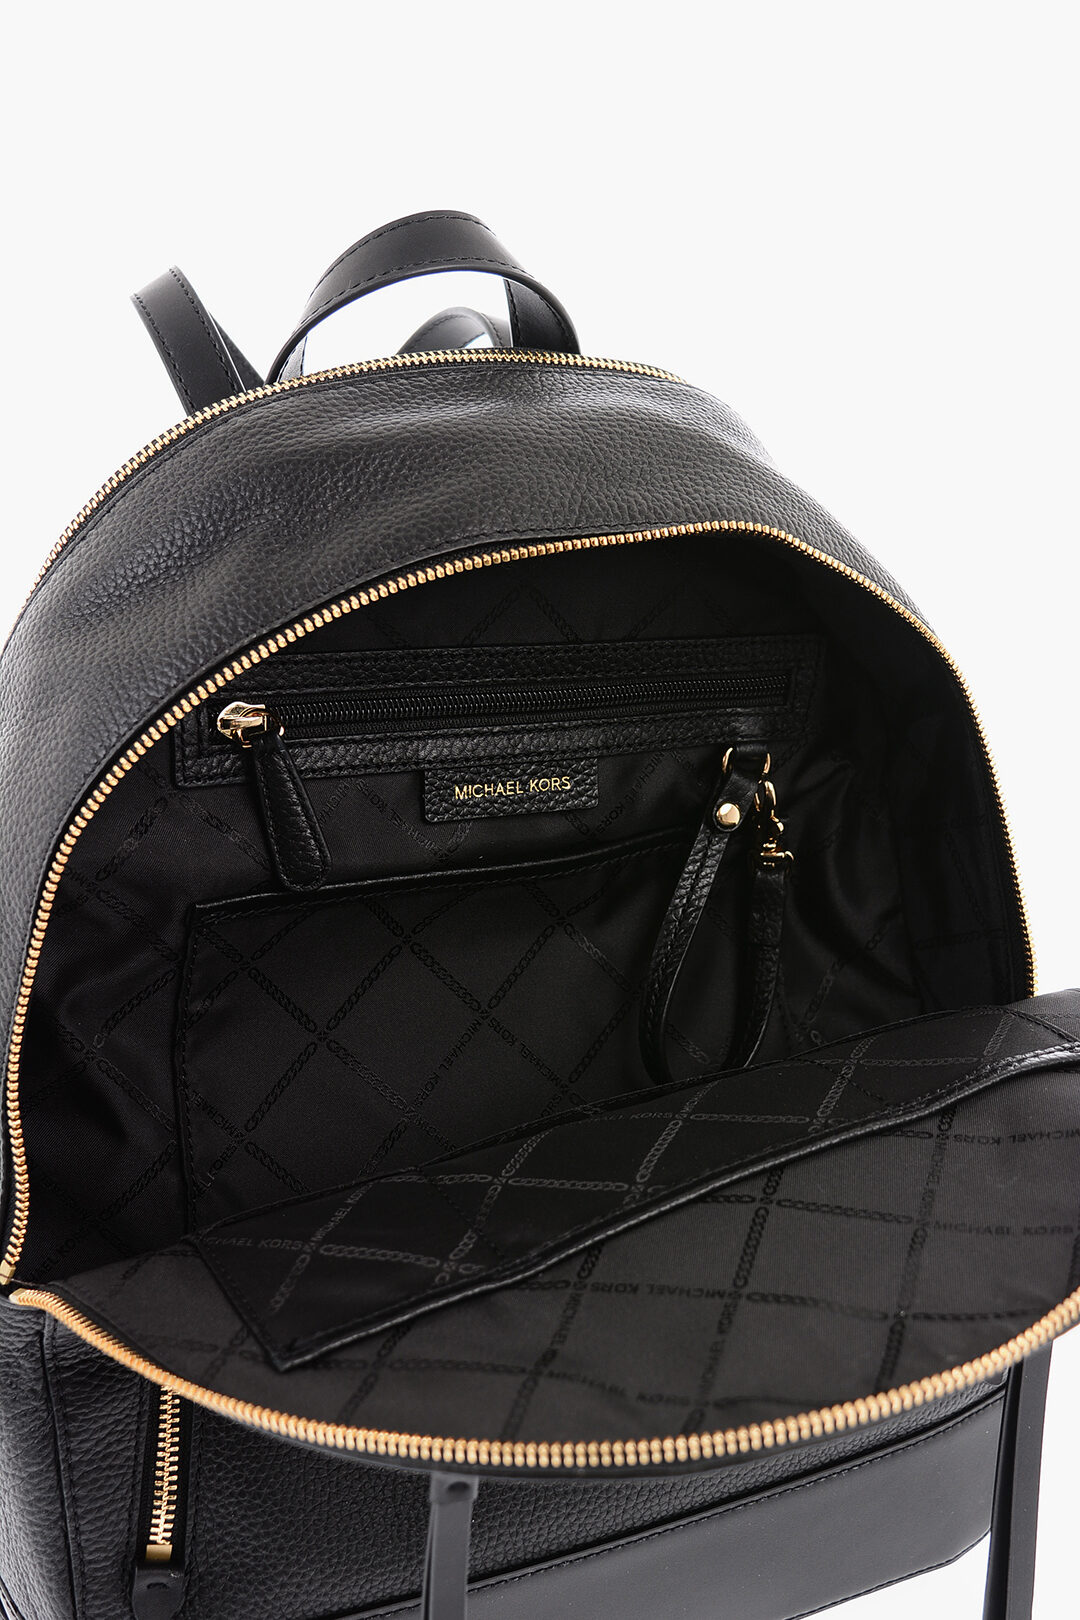 Michael Kors - Erin Large Pebbled Leather Backpack Black | www.luxurybags.eu